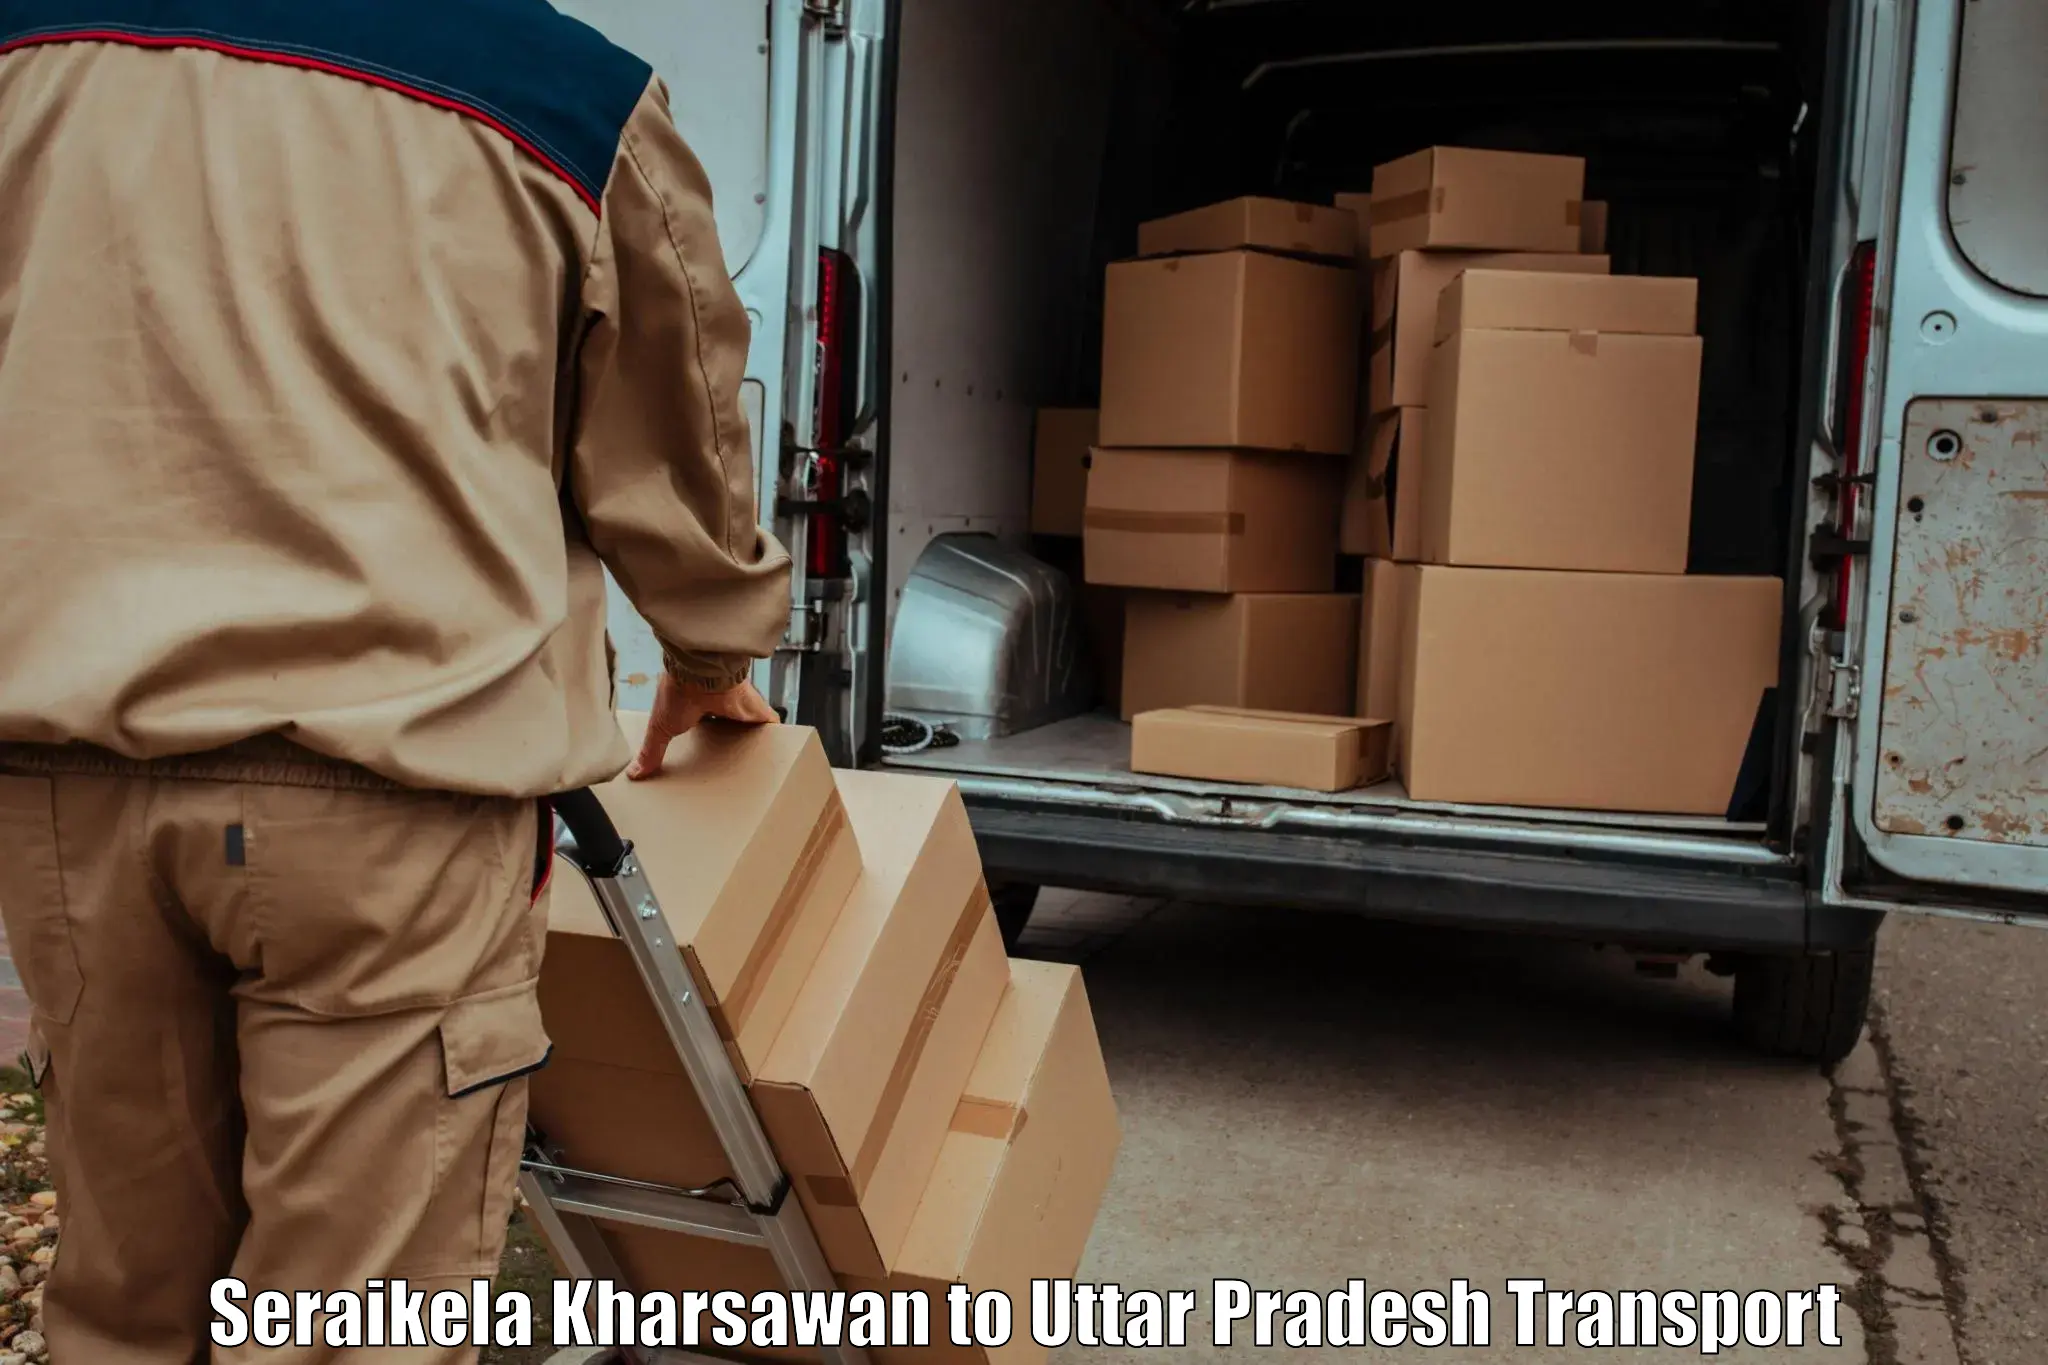 Commercial transport service Seraikela Kharsawan to Shahjahanpur